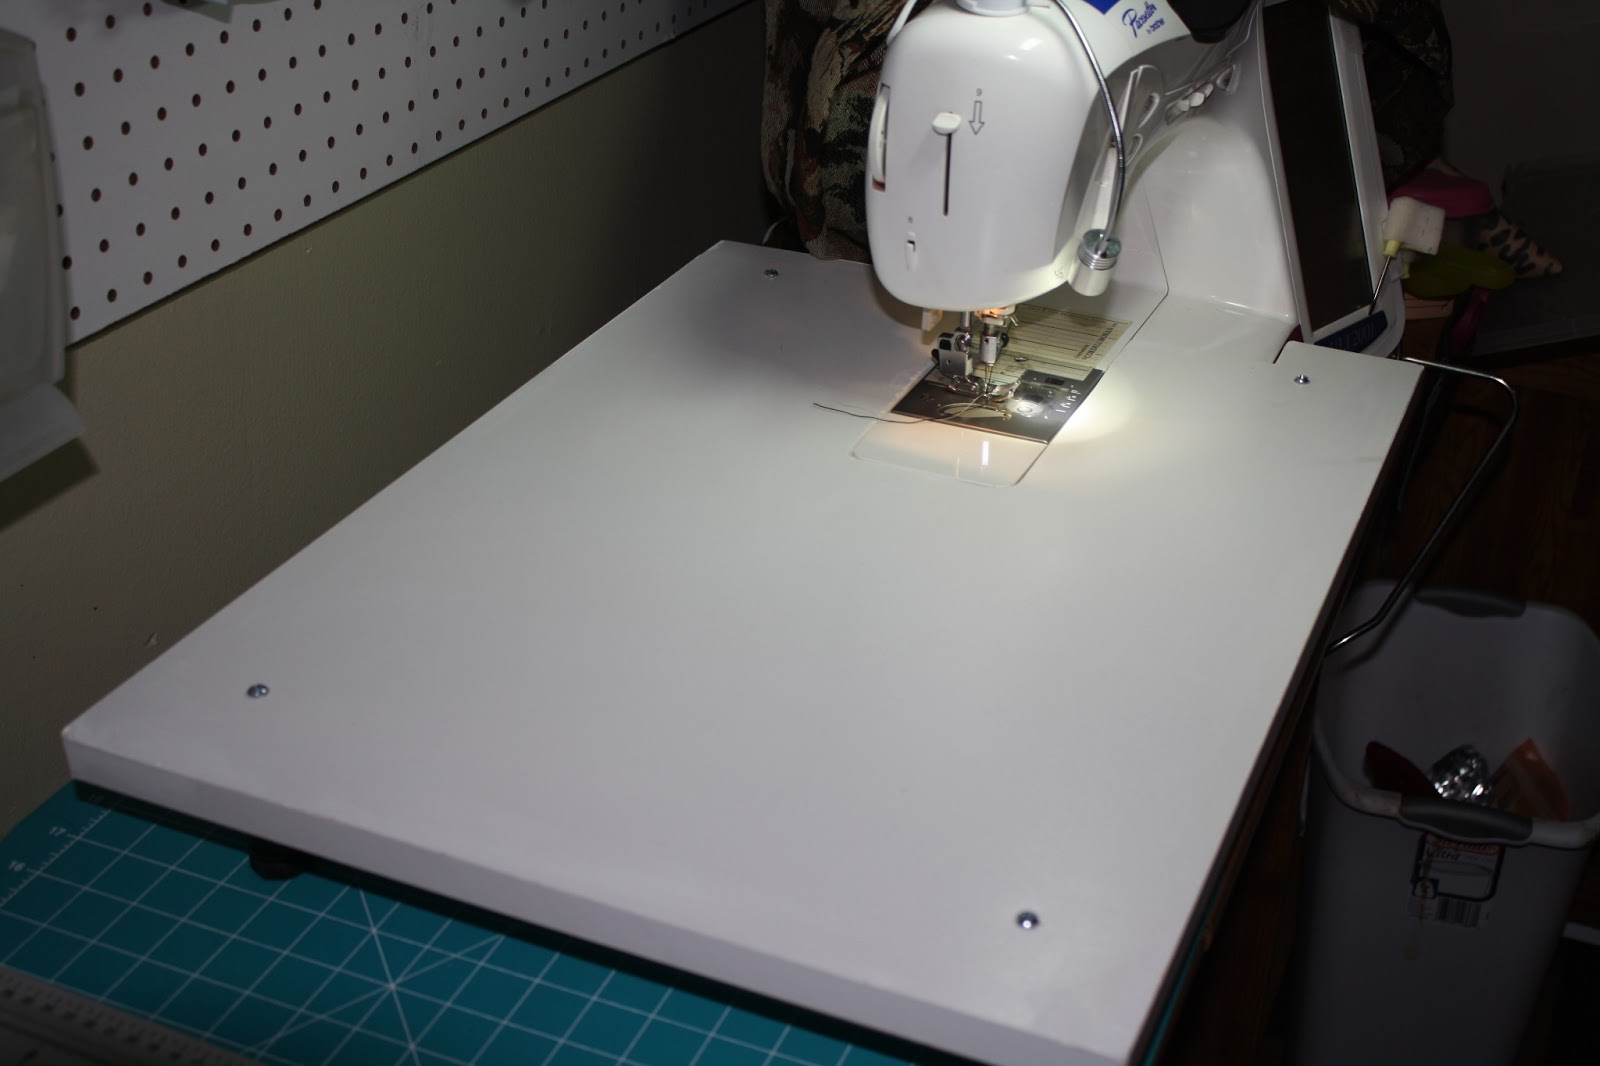 christophernejman: Make A Sewing Machine Extension Table